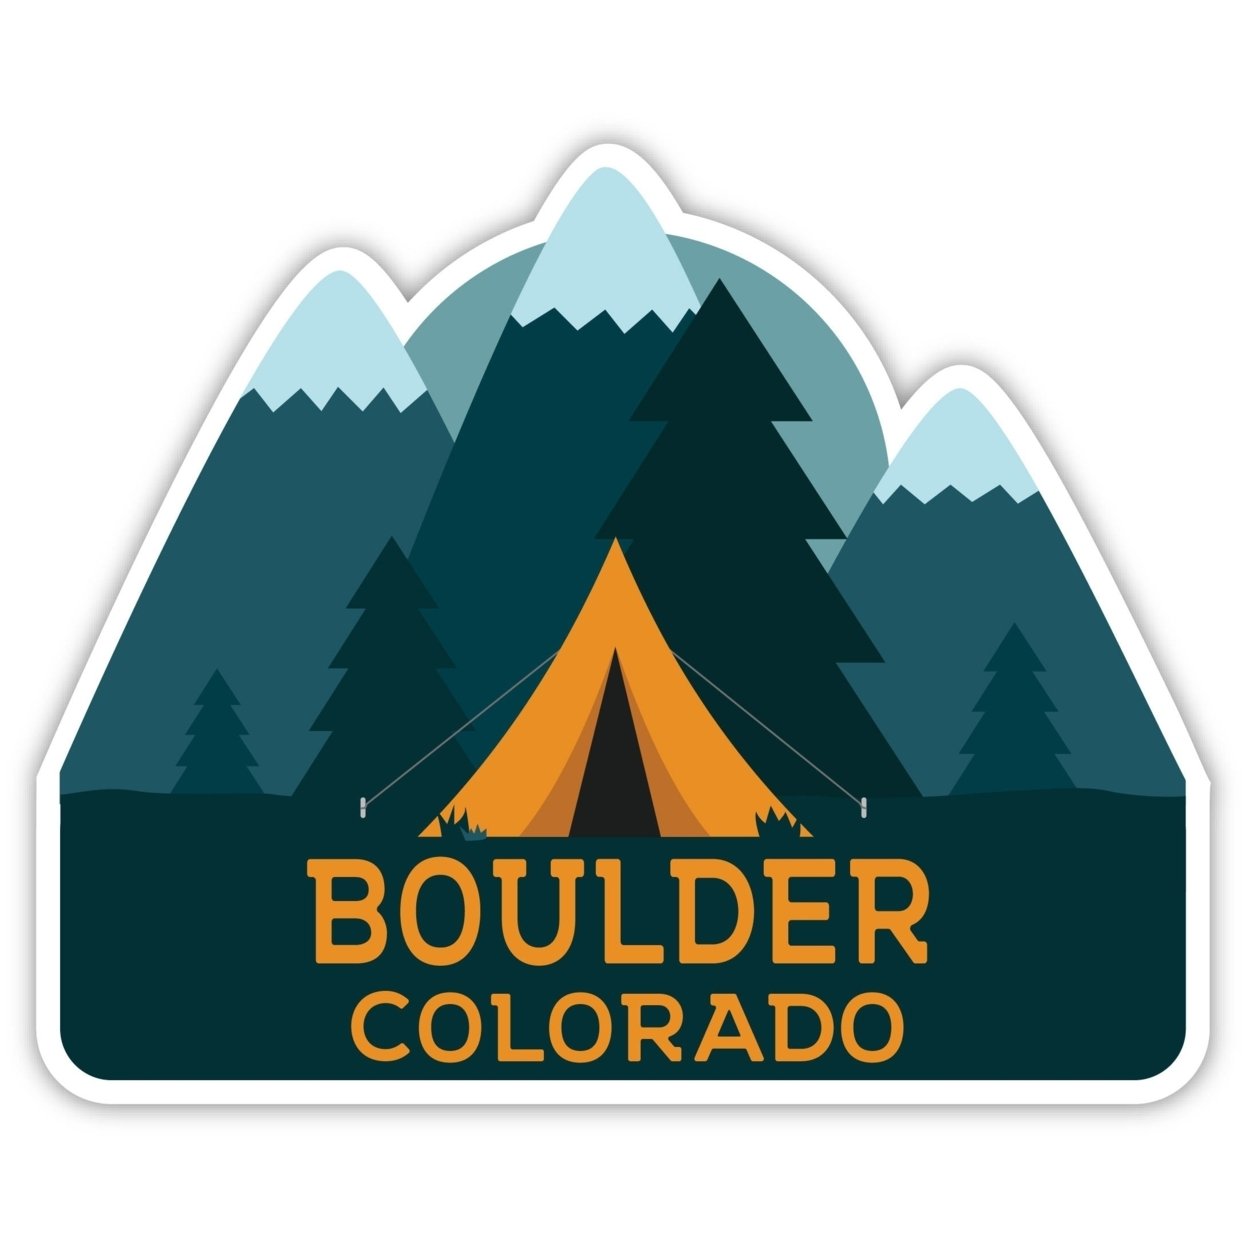 Boulder Colorado Souvenir Decorative Stickers (Choose Theme And Size) - 4-Pack, 10-Inch, Adventures Awaits